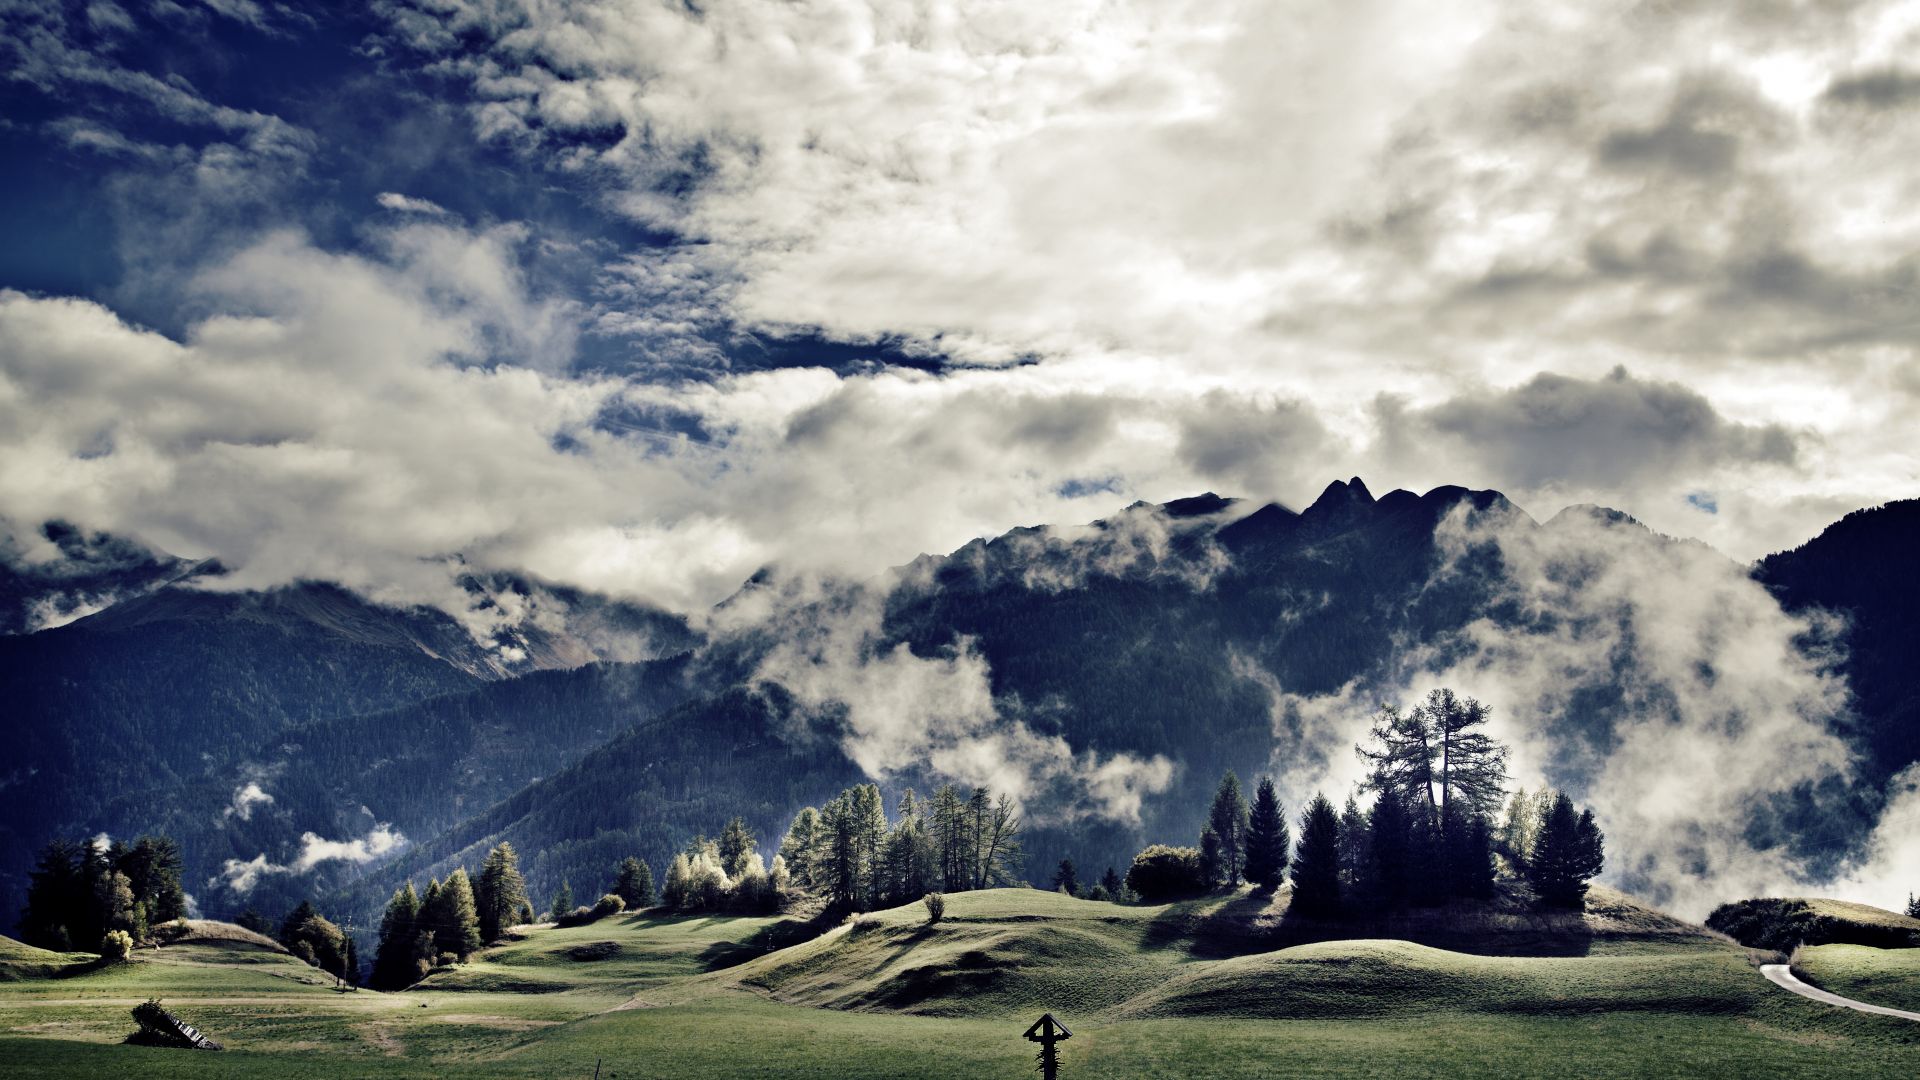 Тироль, 5k, 4k, 8k, Австрия, горы, луга, облака, Tirol, 5k, 4k wallpaper, 8k, Austria, mountains, meadows, clouds (horizontal)